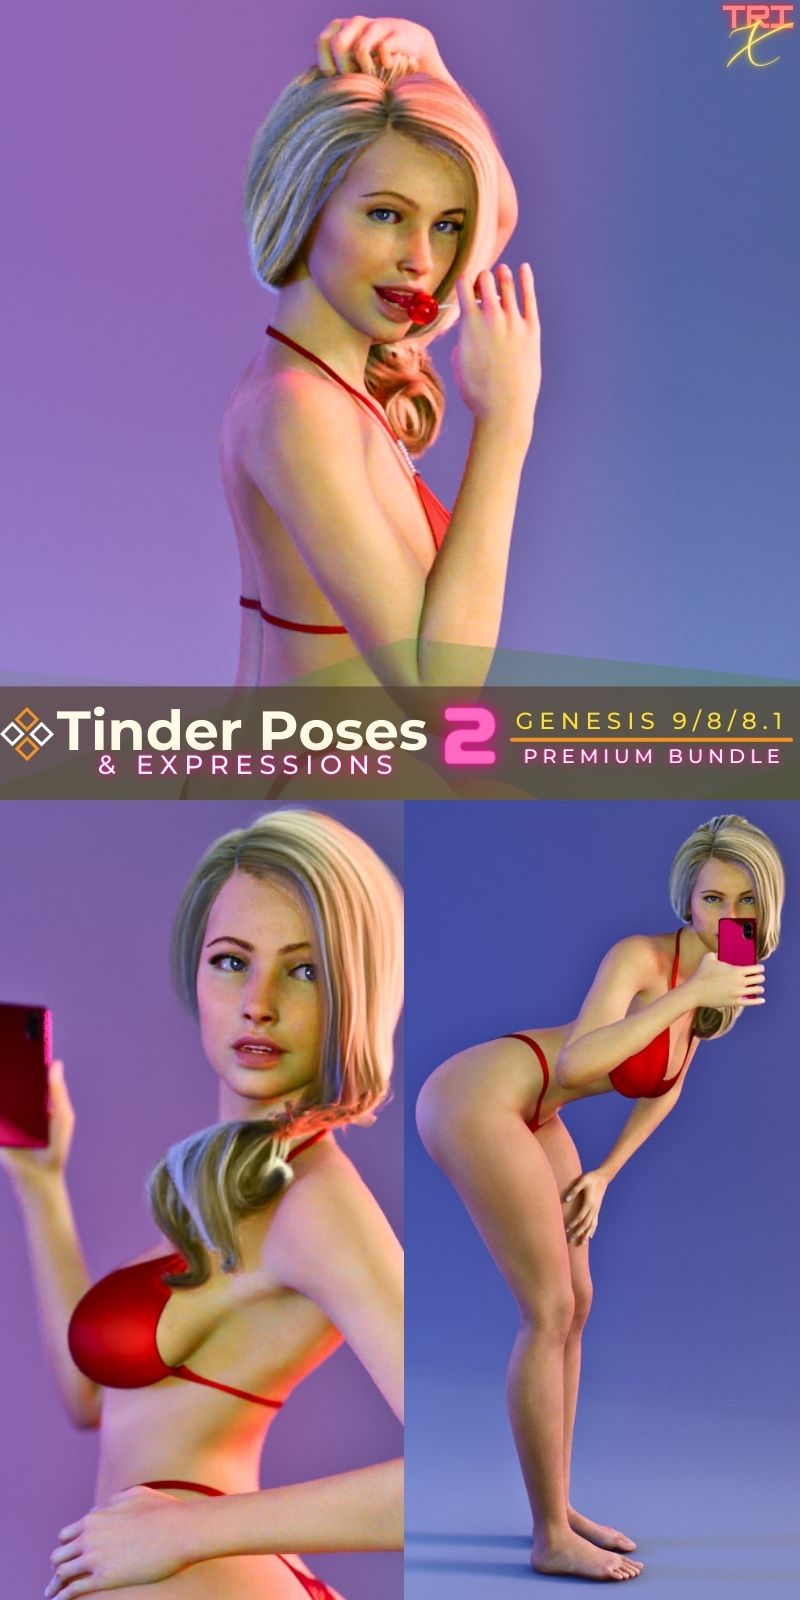 Tinder Poses 2 Bundle for Genesis 9/8/8.1